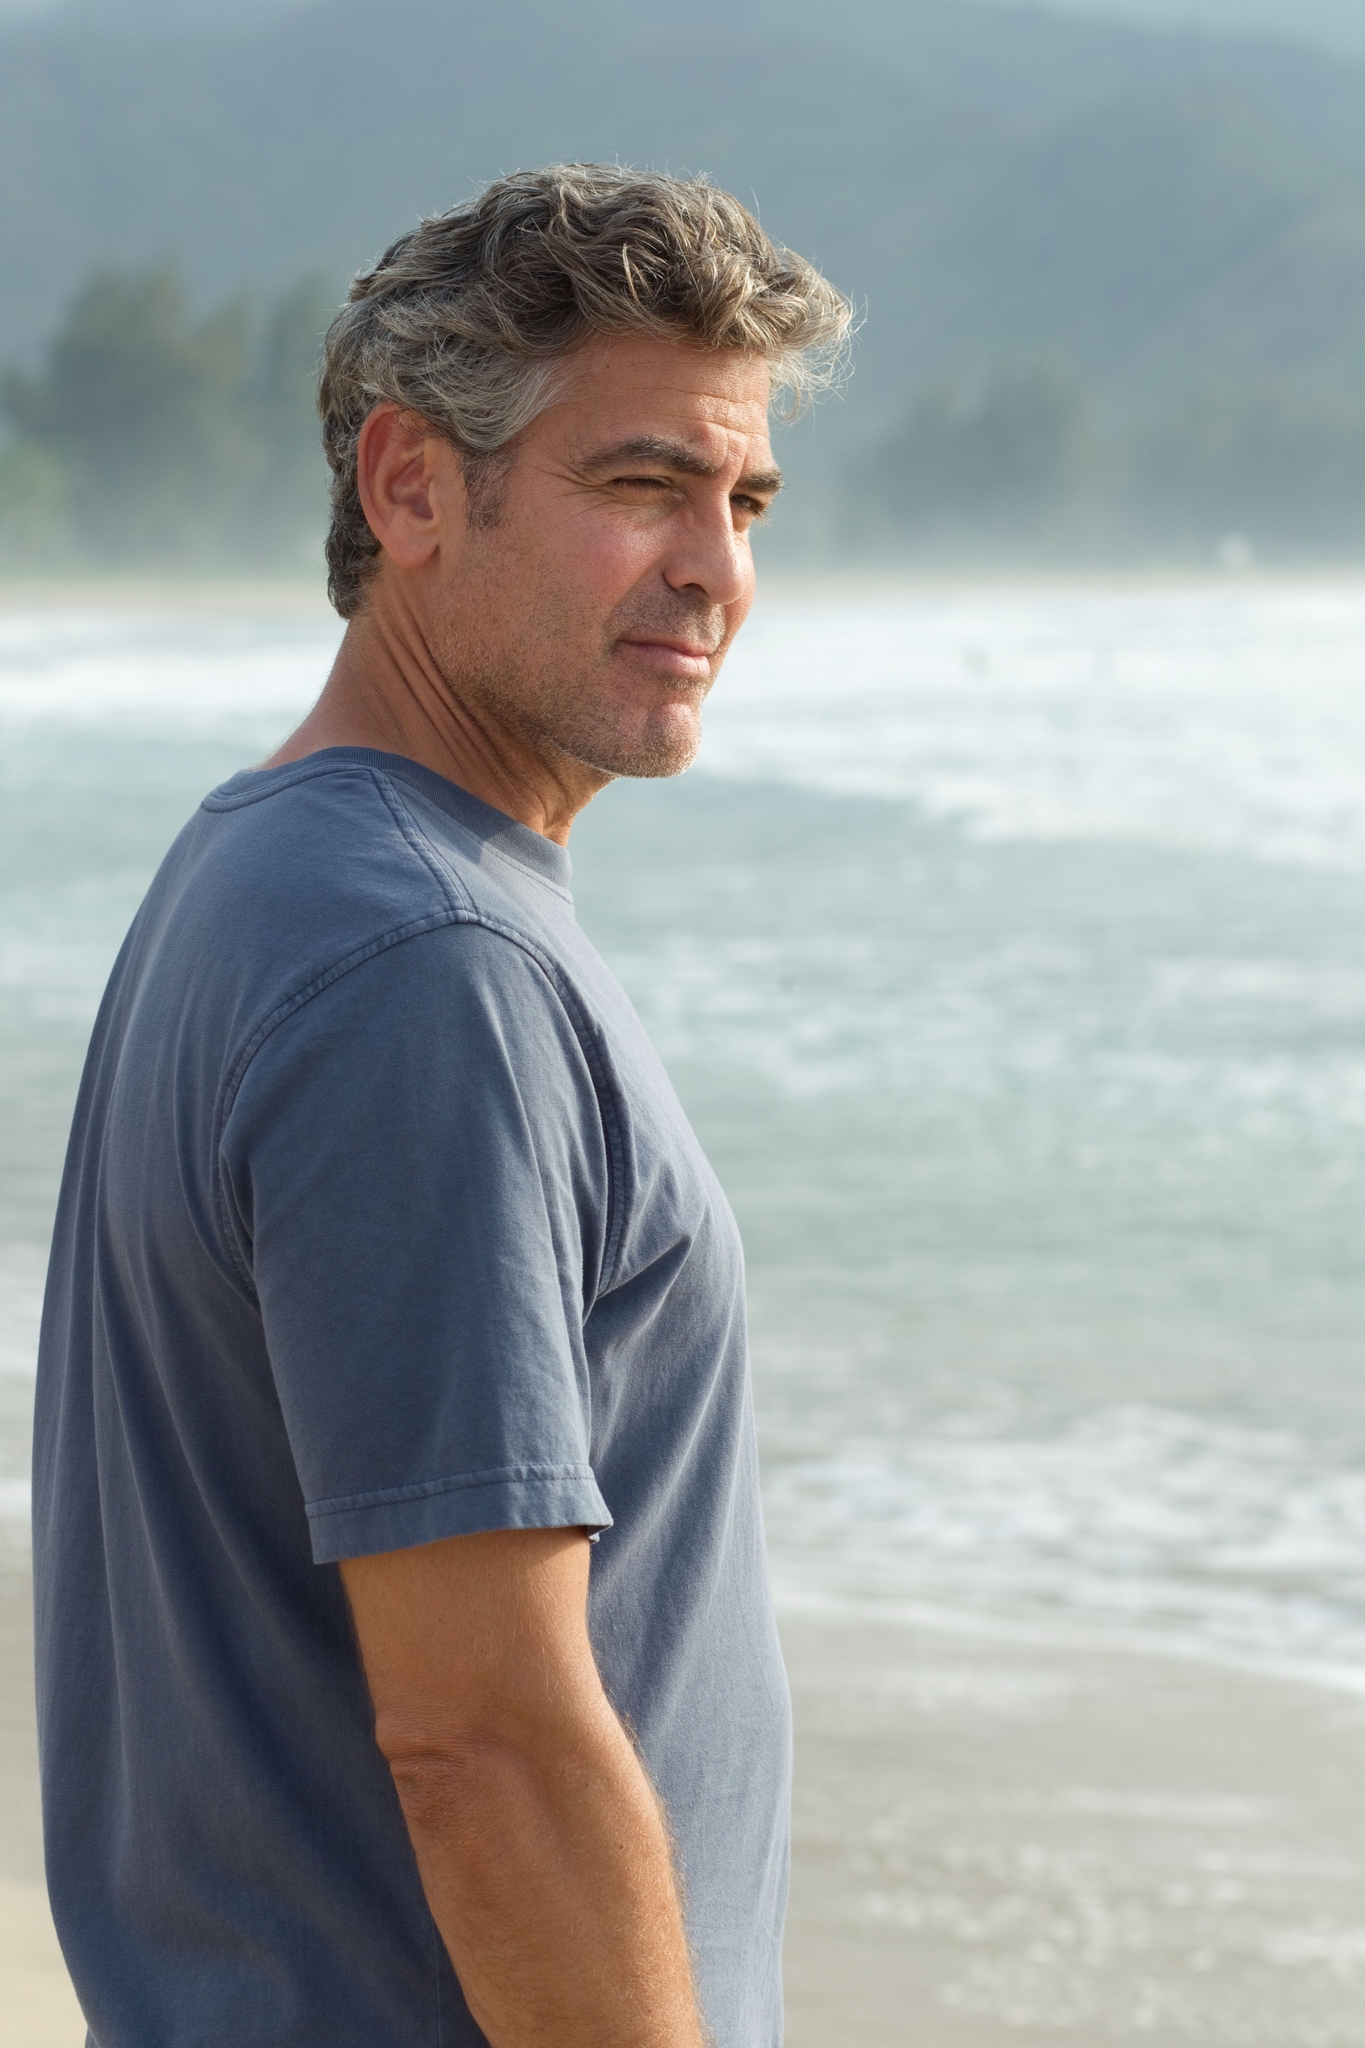 George Clooney in The Descendants (2011)